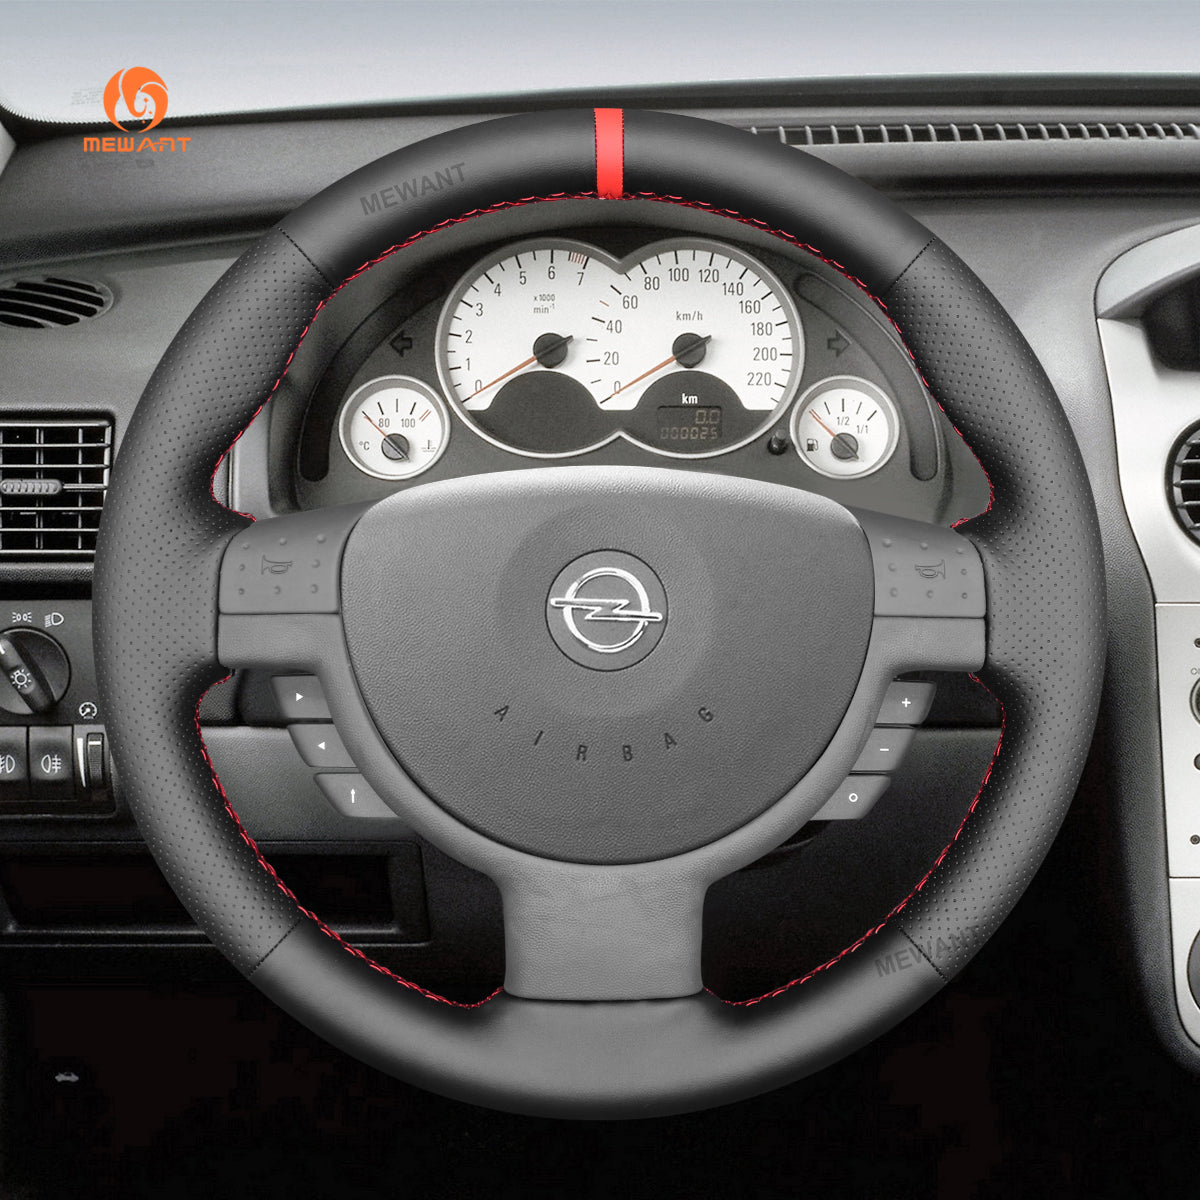 Car Steering Wheel Cover for Opel Corsa C Combo C Vauxhall Corsa C Holden Barina Tigra